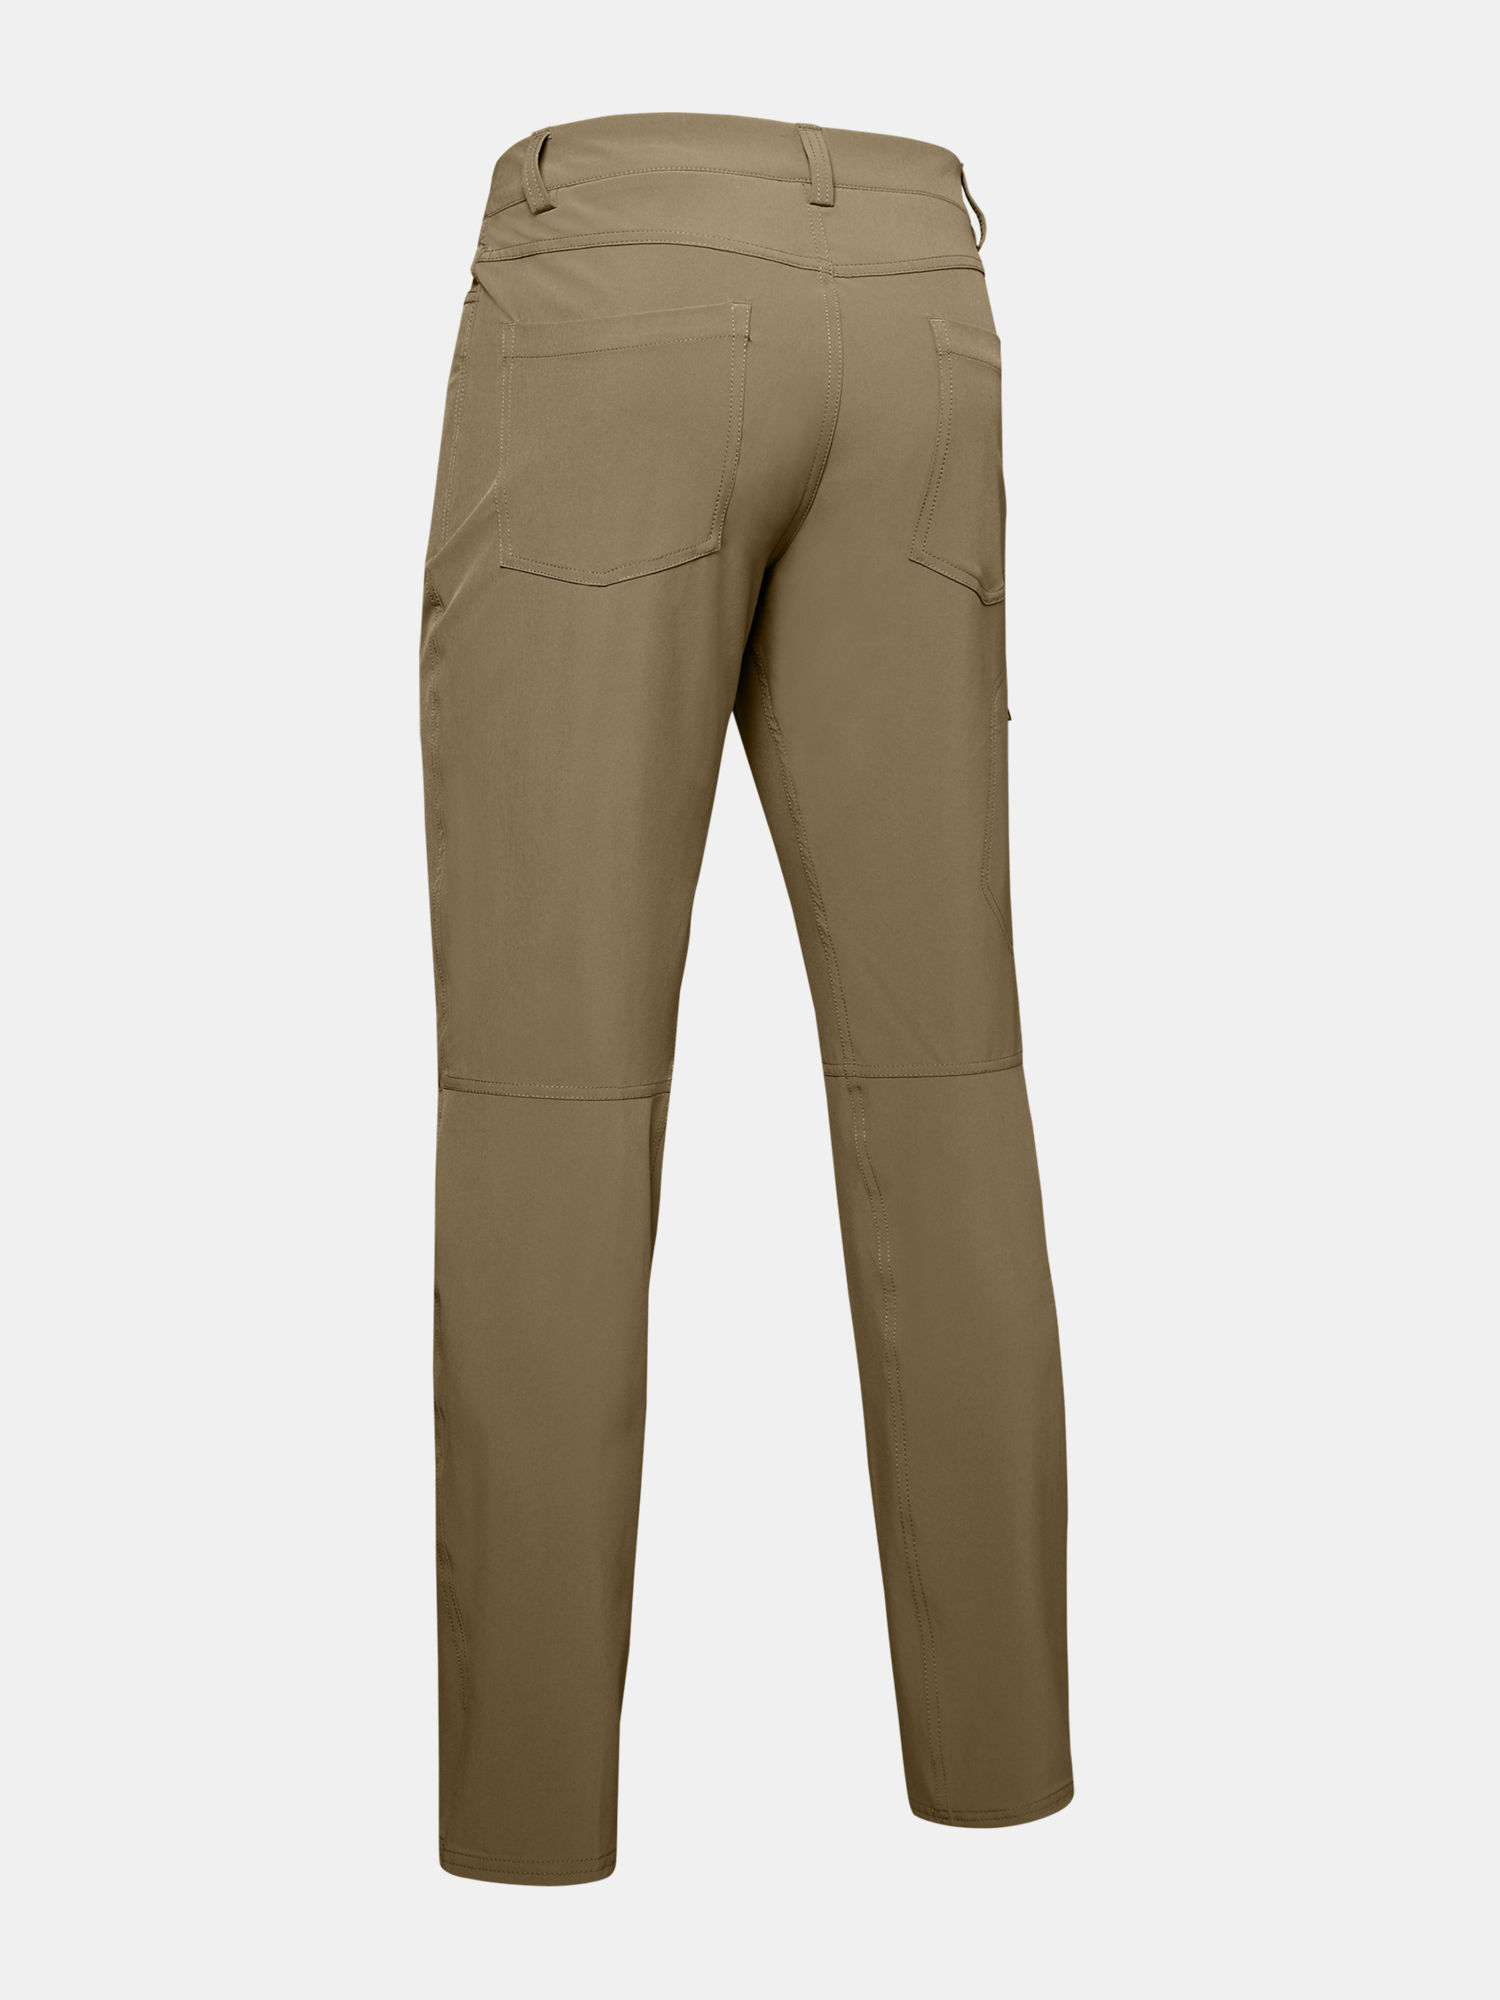 Kalhoty Under Armour Flex Pant-BRN (4)